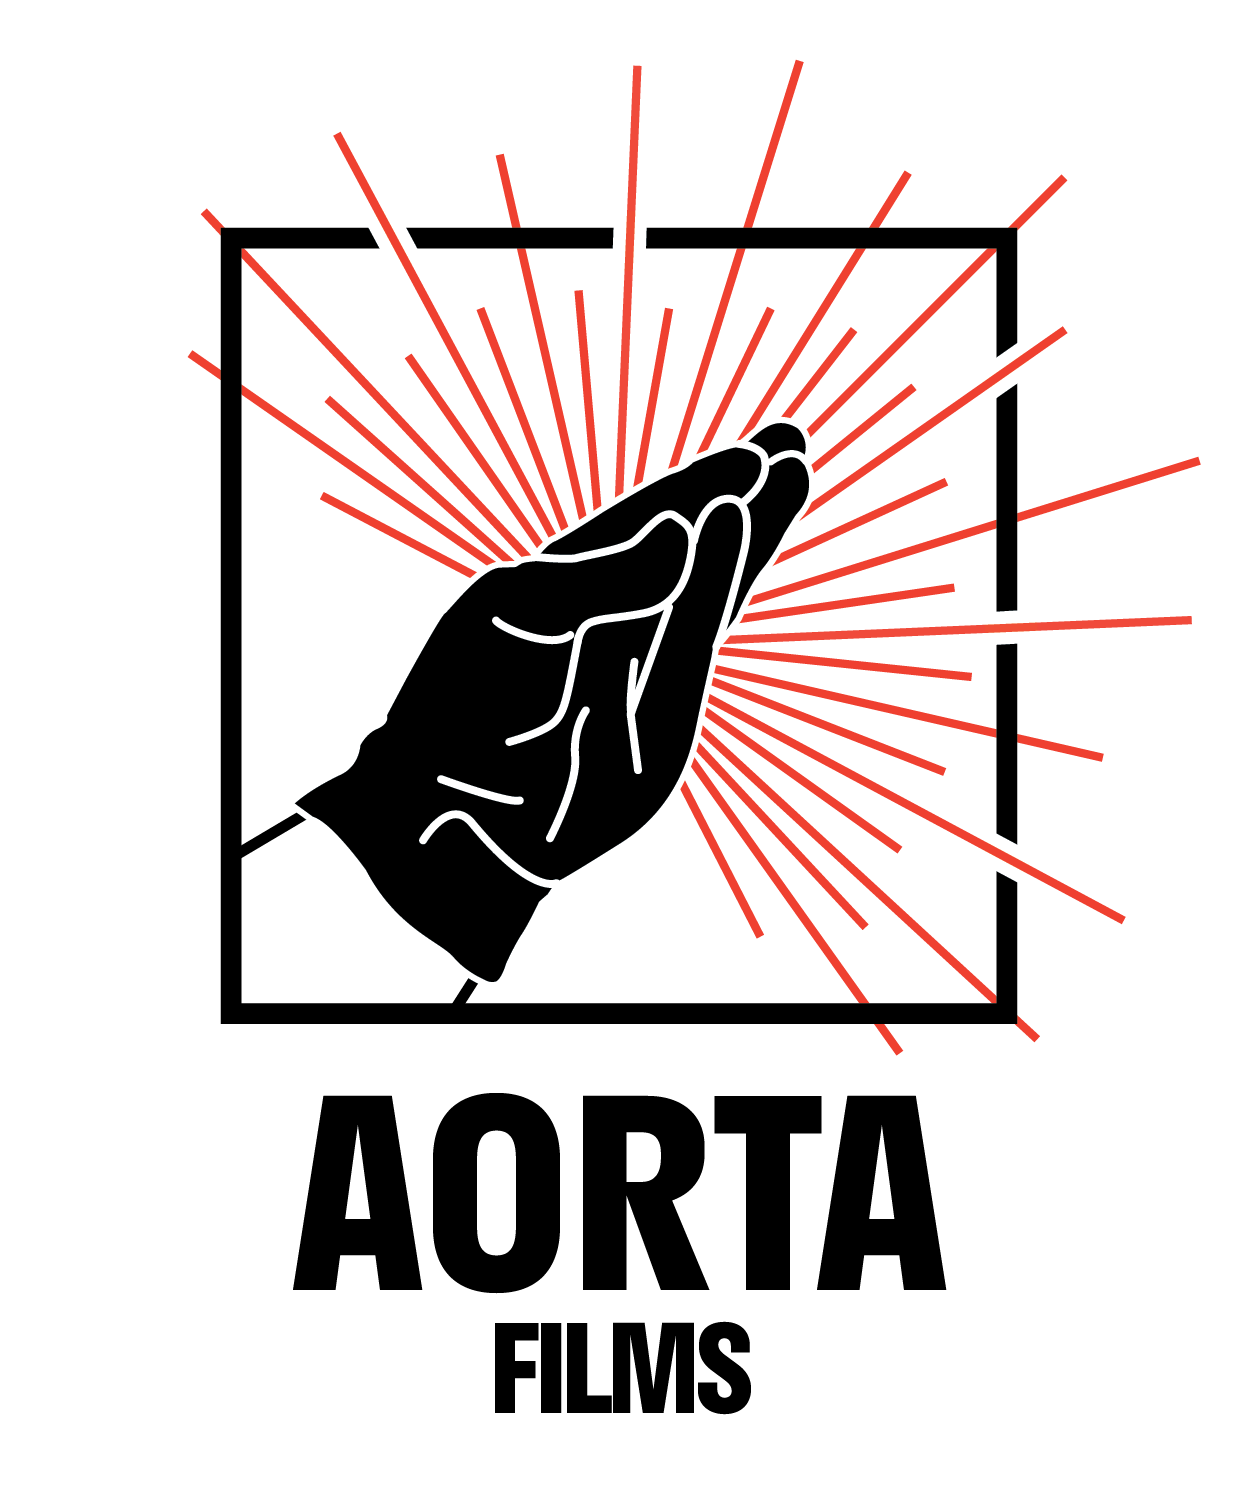 AORTA Films